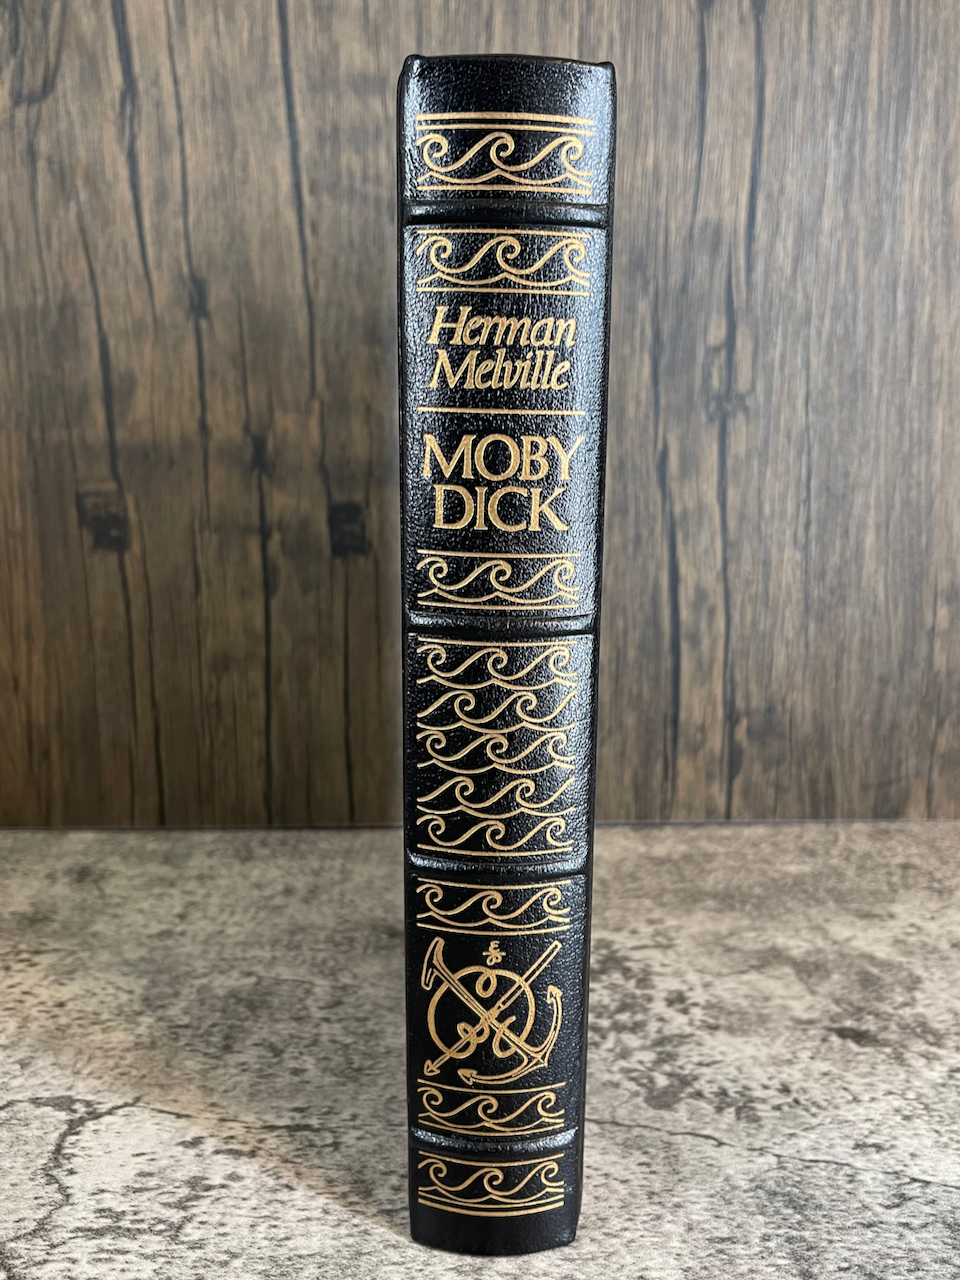 Moby Dick / The Easton Press / 100 Greatest Books / 1977 - Precious Cache